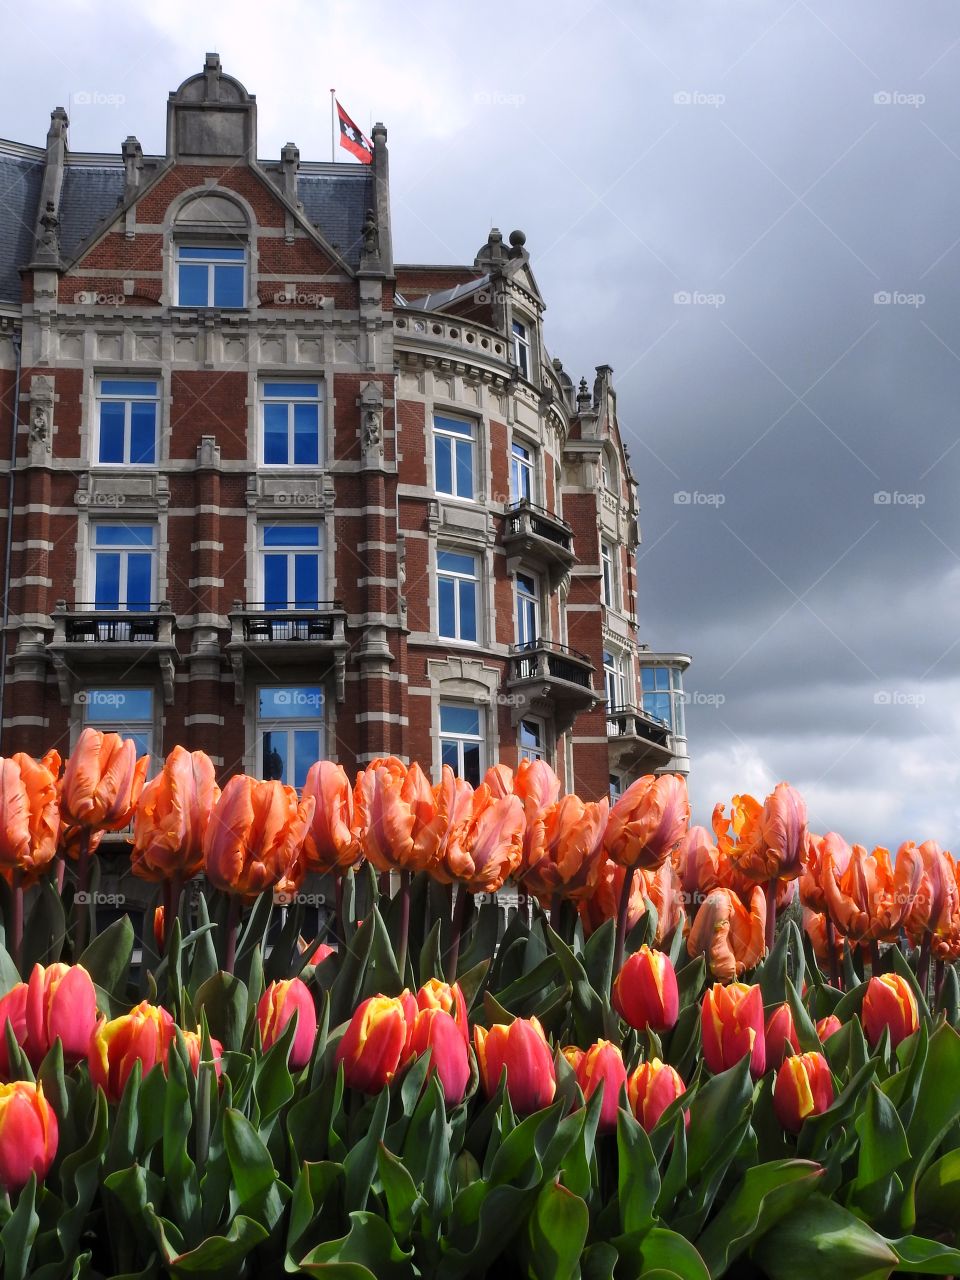 Amsterdam in Spring